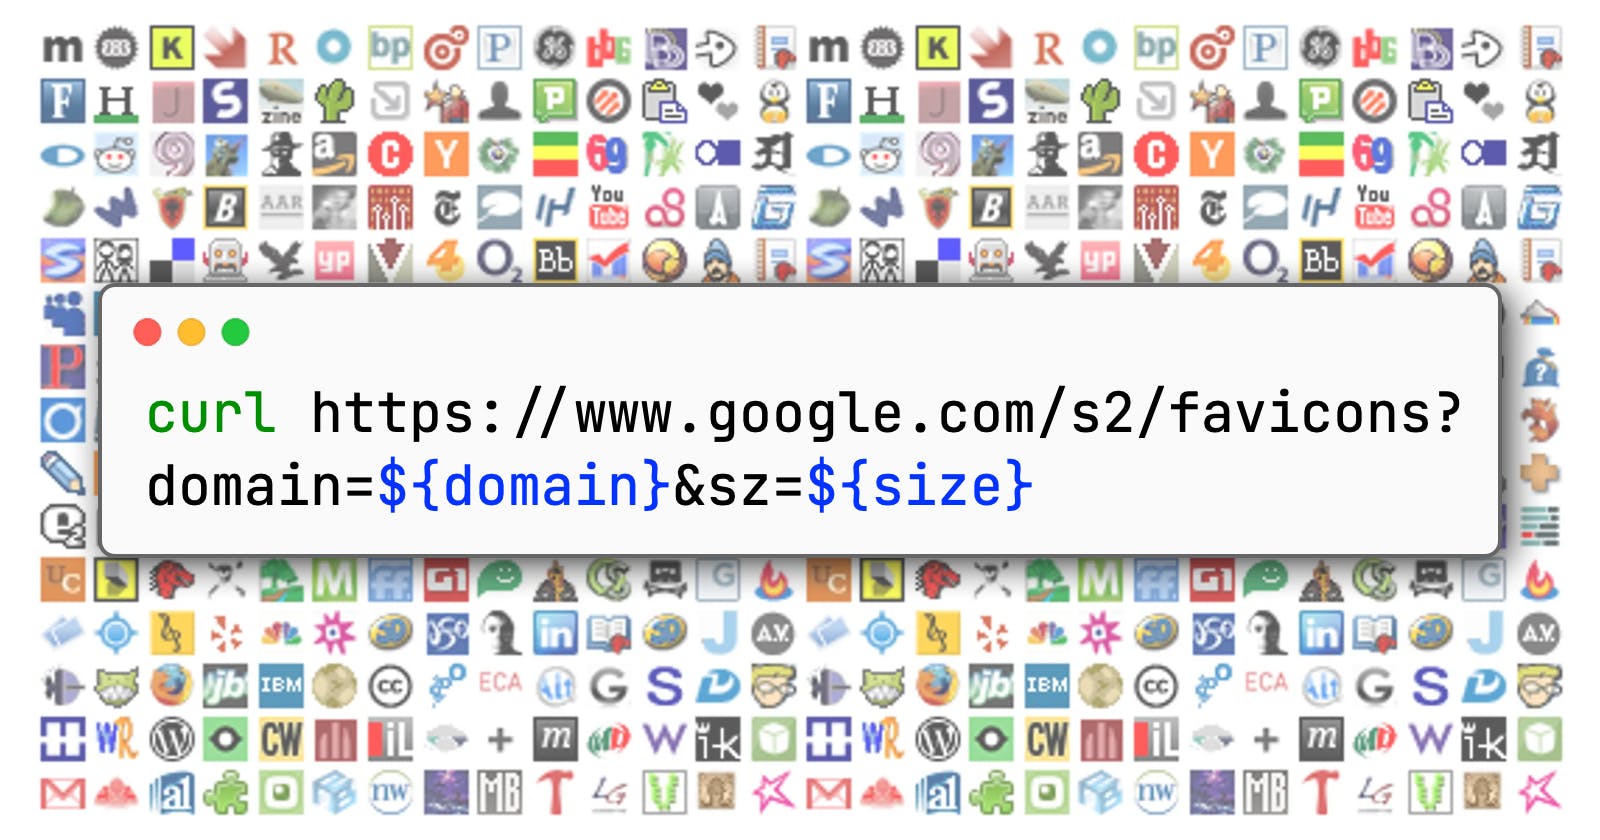 Get favicons from any domain using a hidden google API